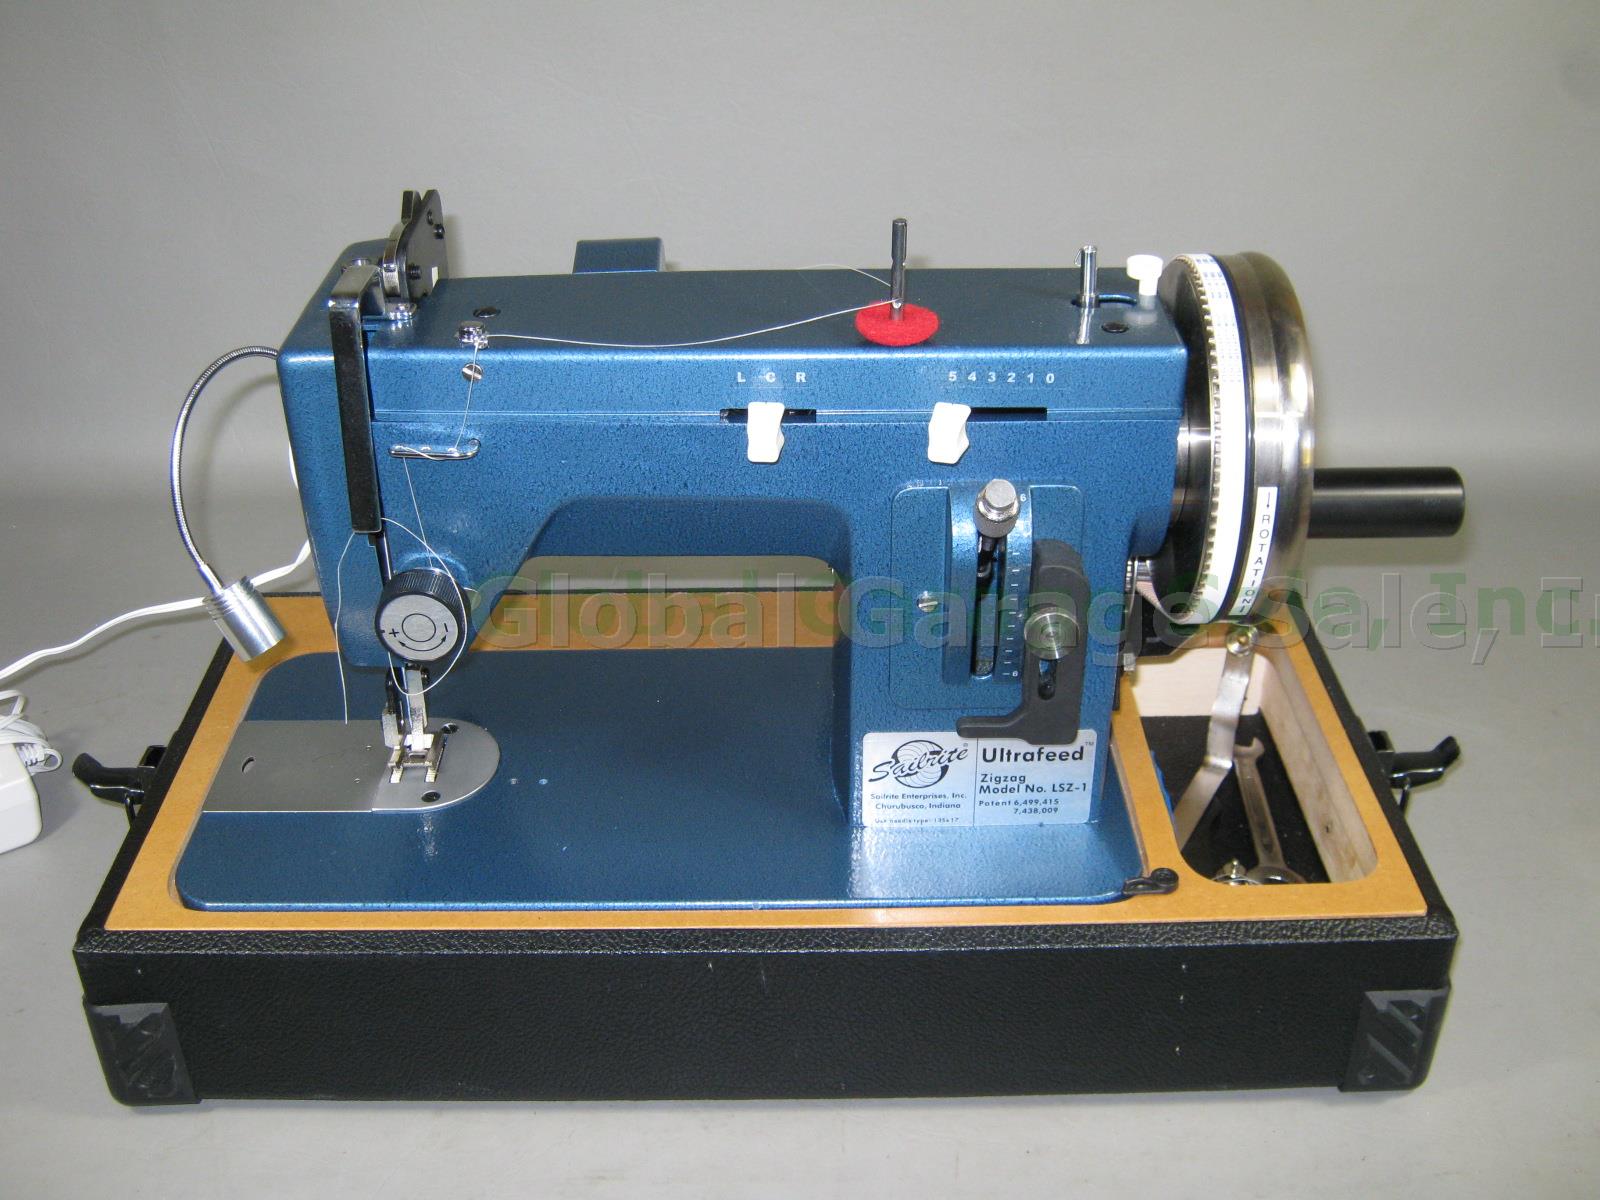 Sailrite Ultrafeed Zigzag LSZ-1 Walking Foot Sewing Machine W/ Case Pedal Lot NR 2